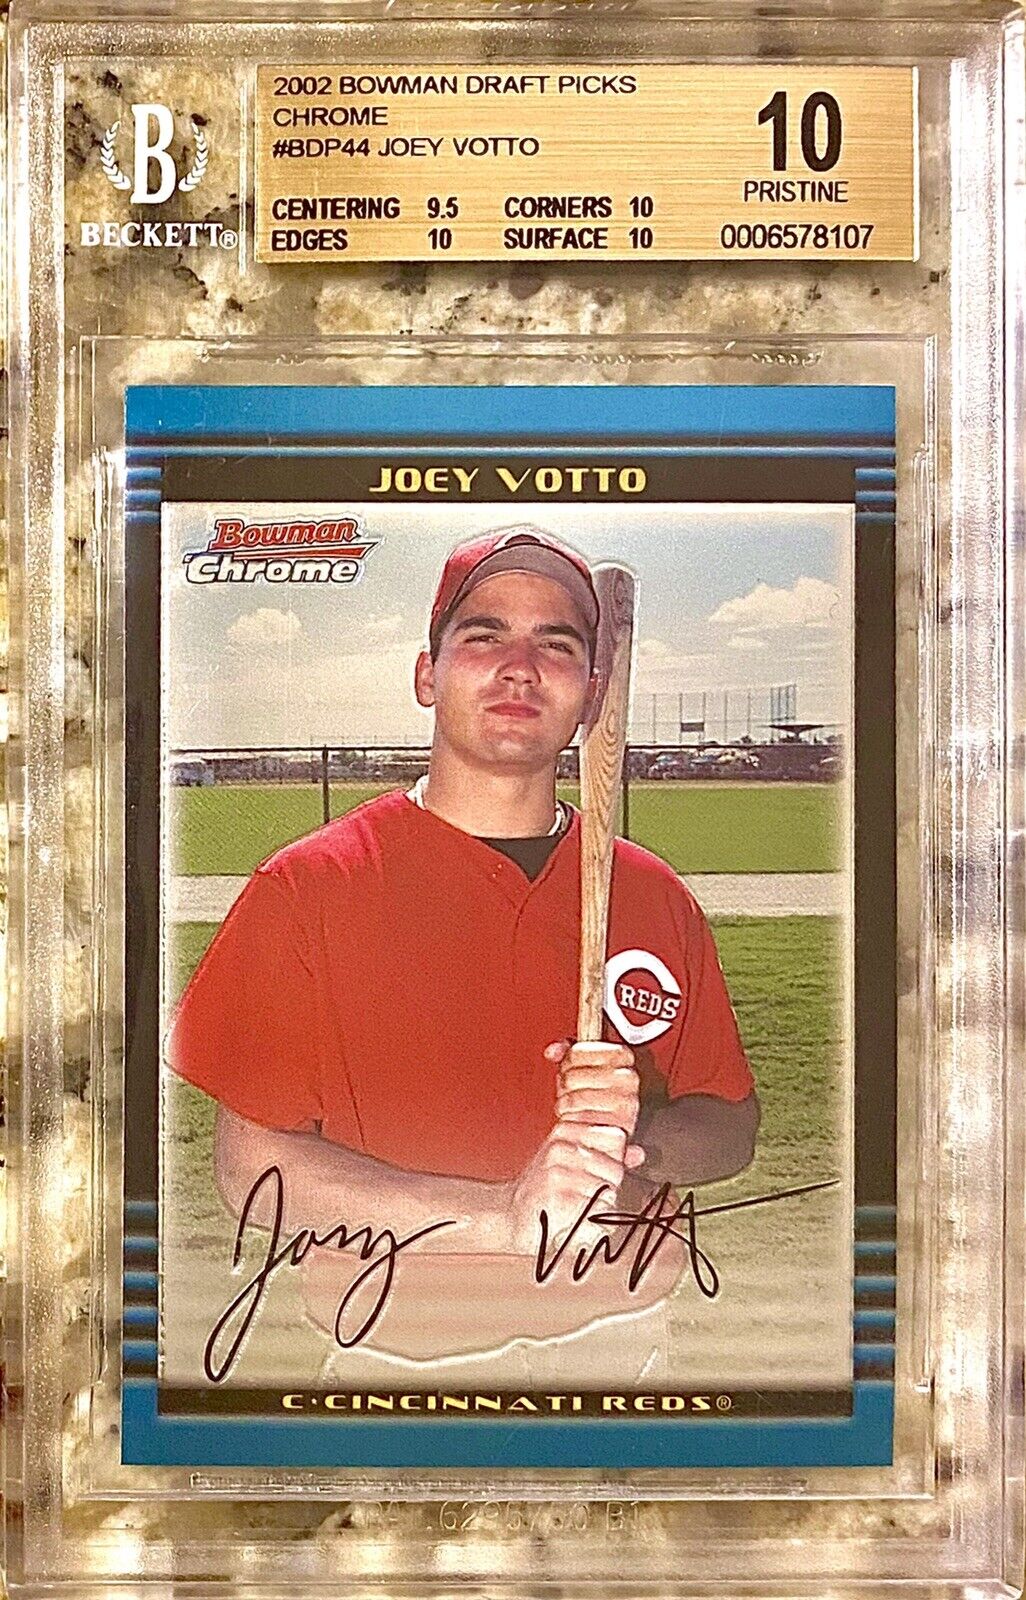 2002 Bowman Chrome Draft Joey Votto